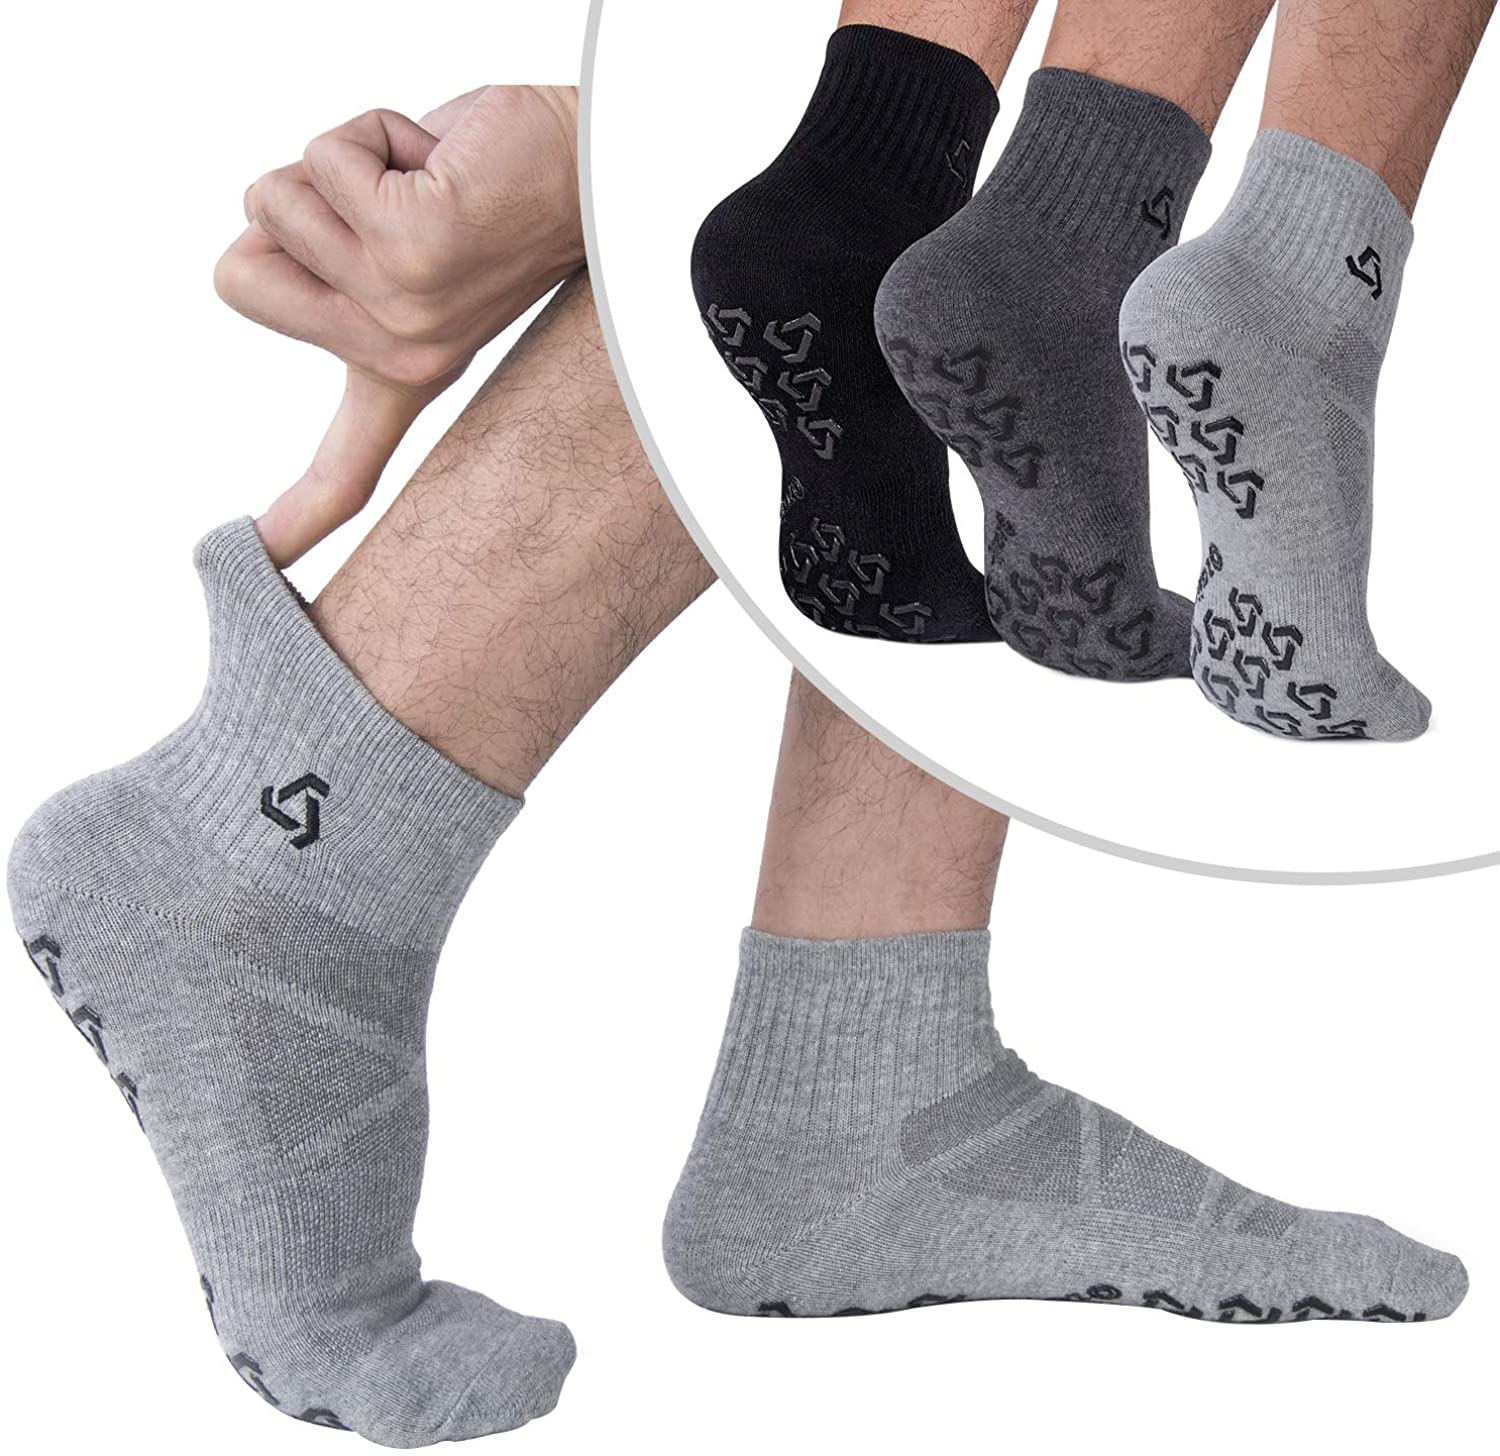 Anti-Skid Socks With Grips Non Slip 